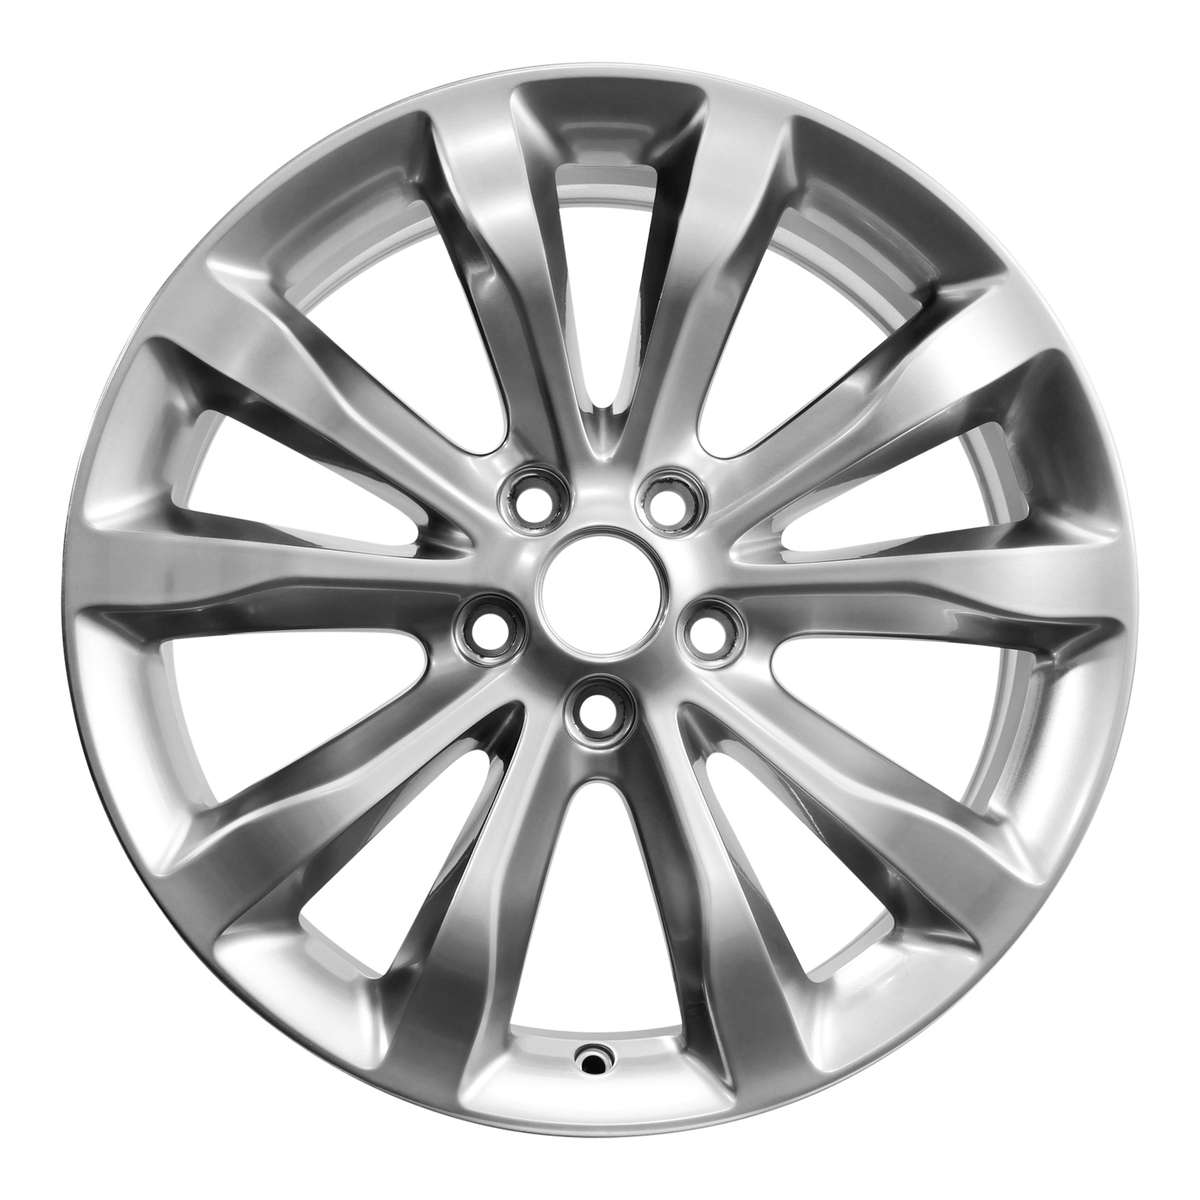 2015 Chrysler 300 19" OEM Wheel Rim W2538H